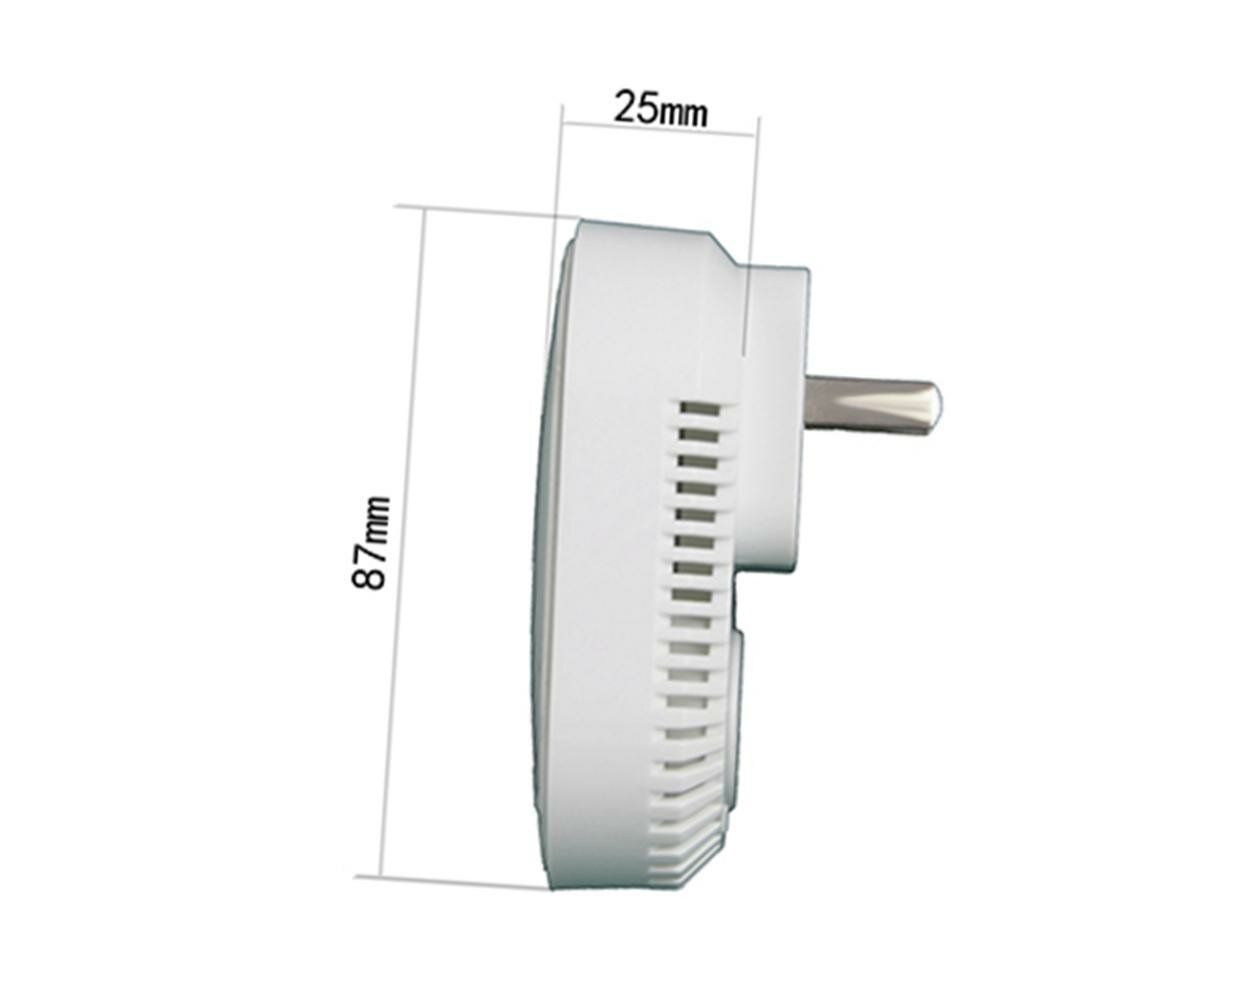 GSM датчик отключения электричества ДатчикOFF-220 - сигнализатор отключения электричества датчик отключения электричества